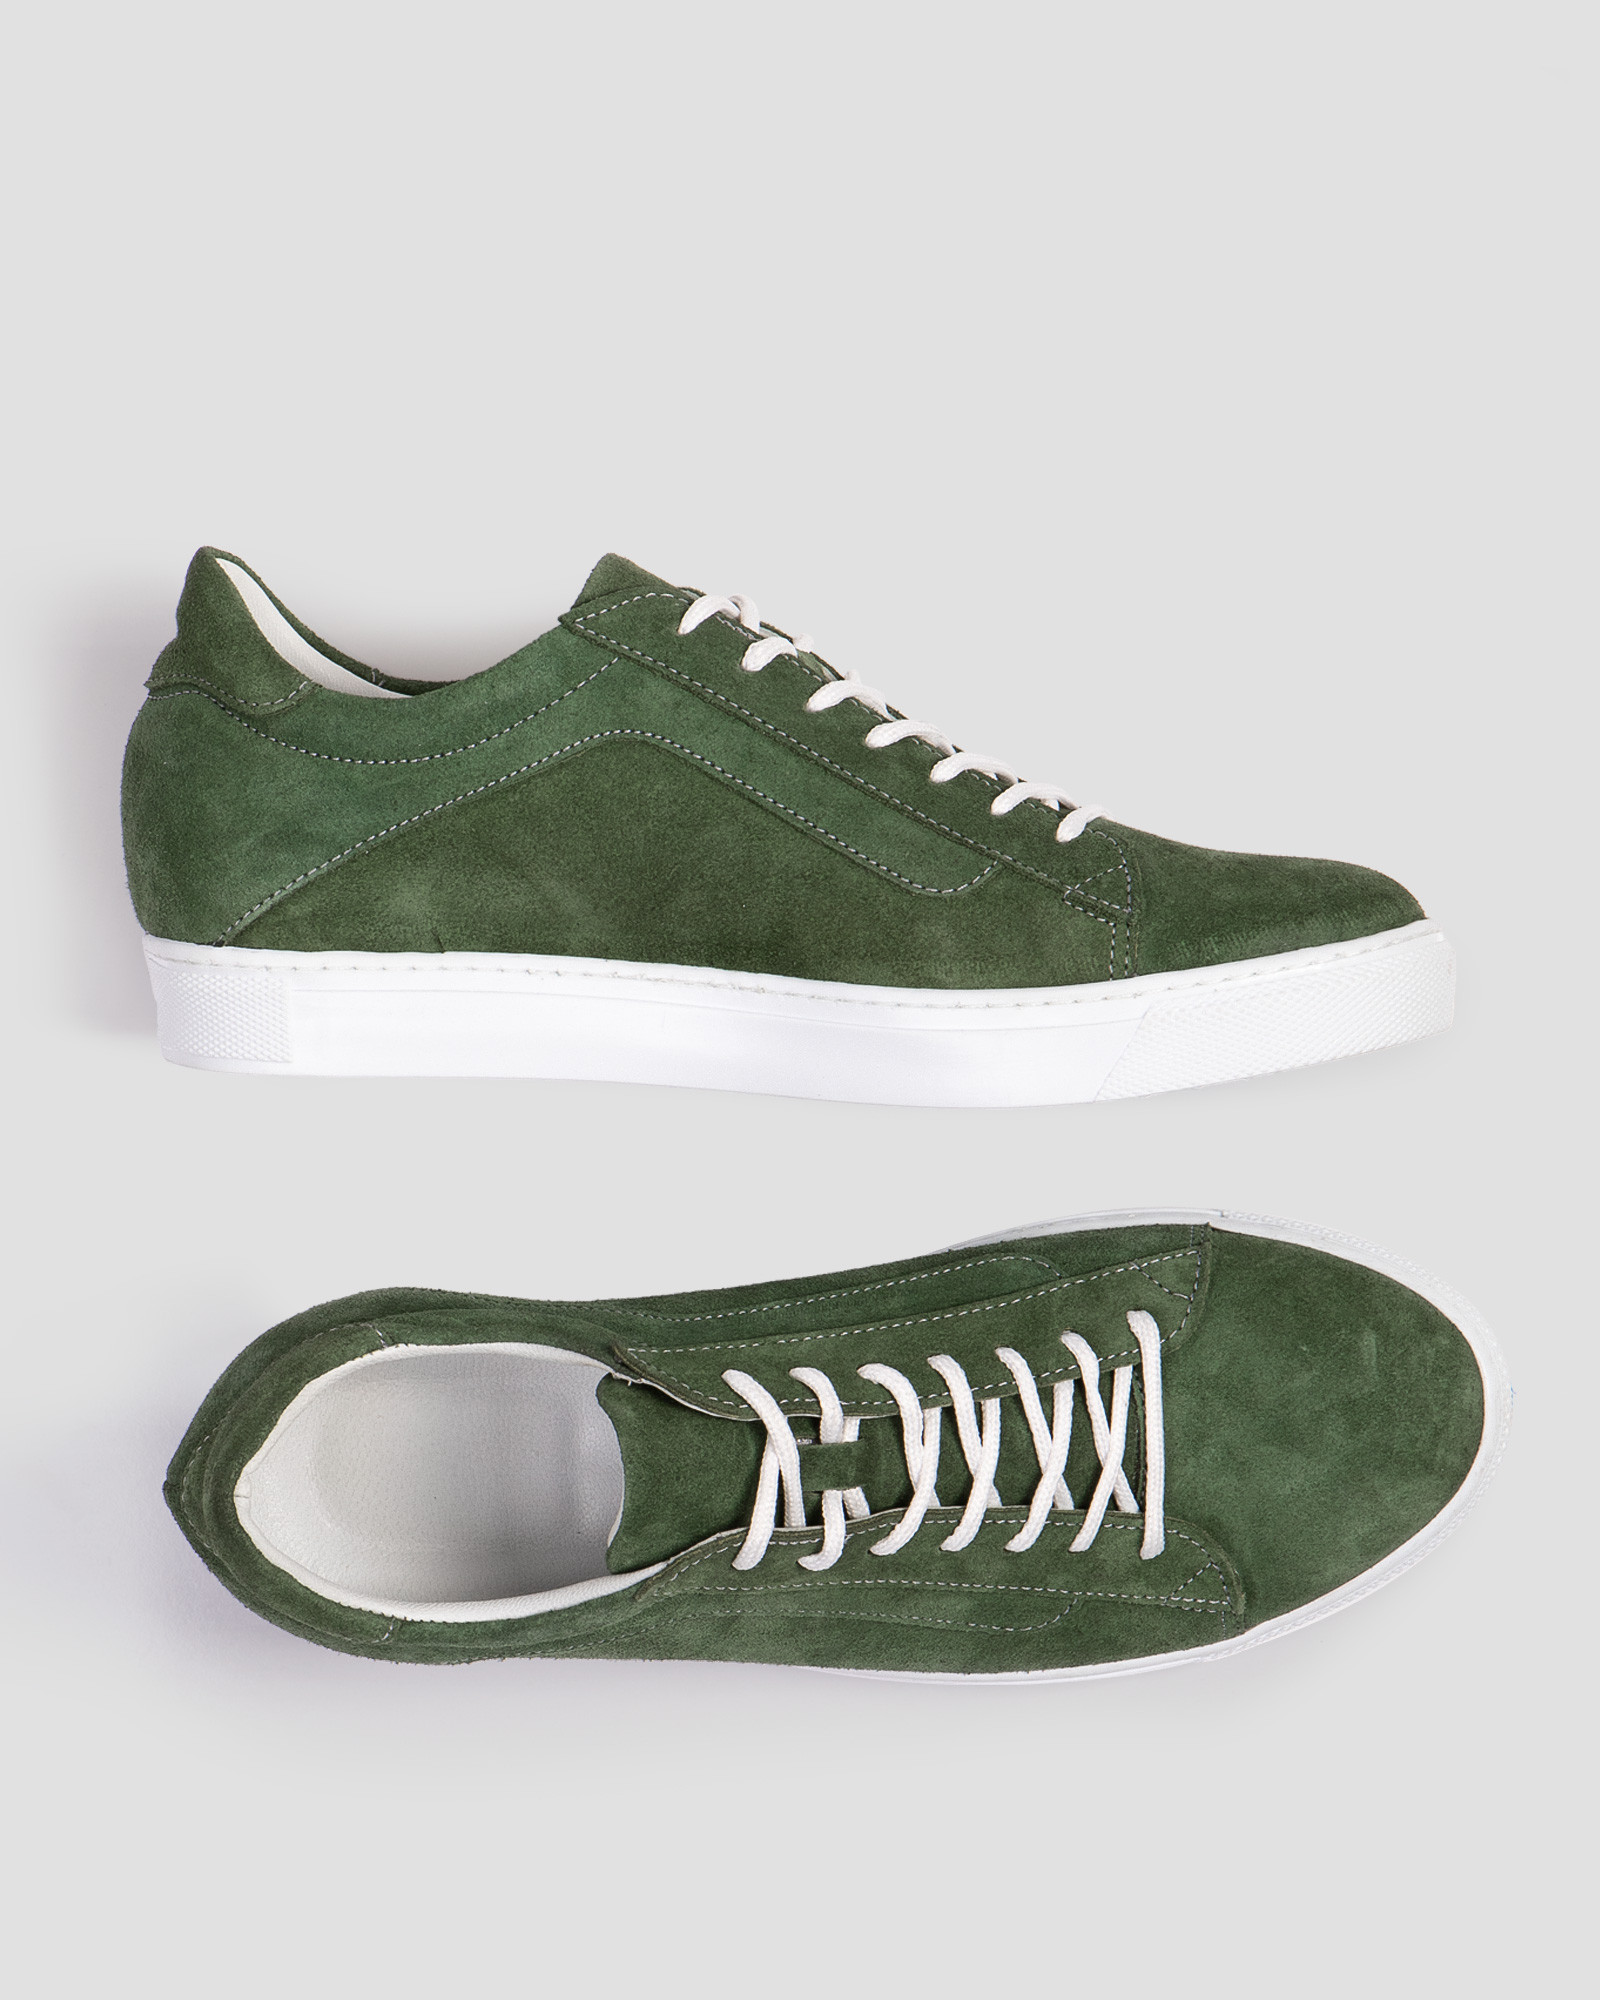 کفش روز مره سبز بندی مردانه با چرم طبیعی 17444110